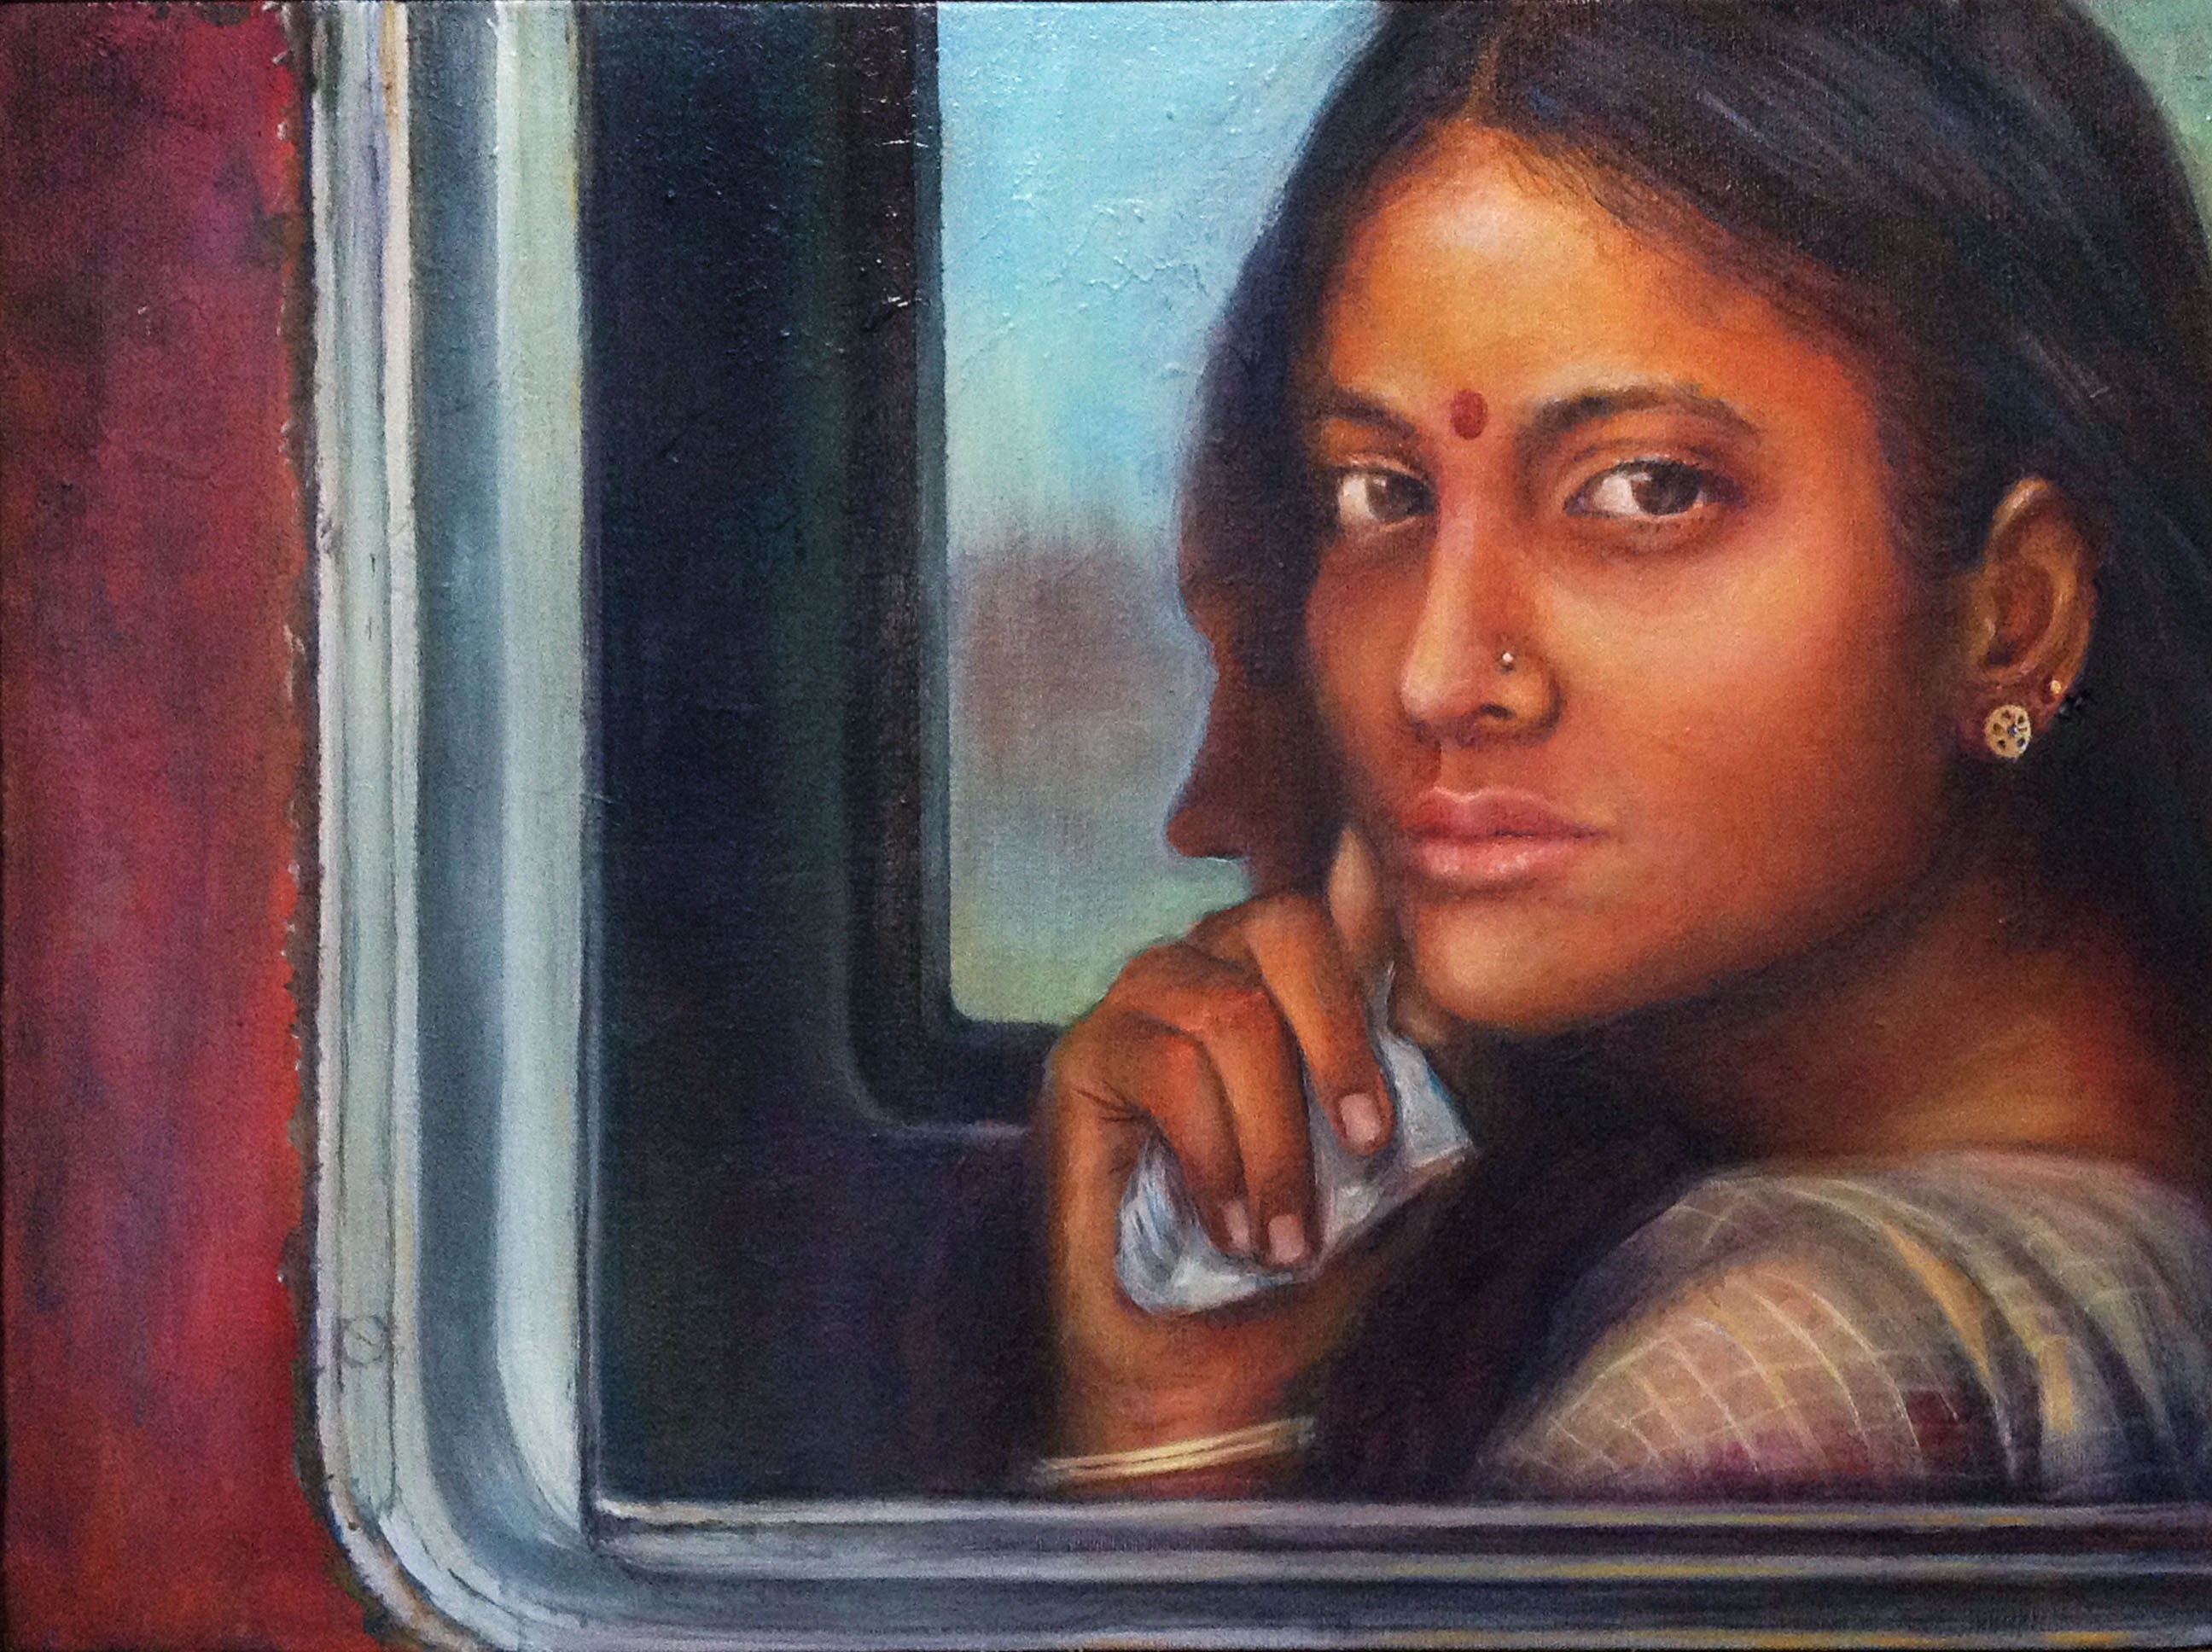 Girl in a Train by Dillai Joseph